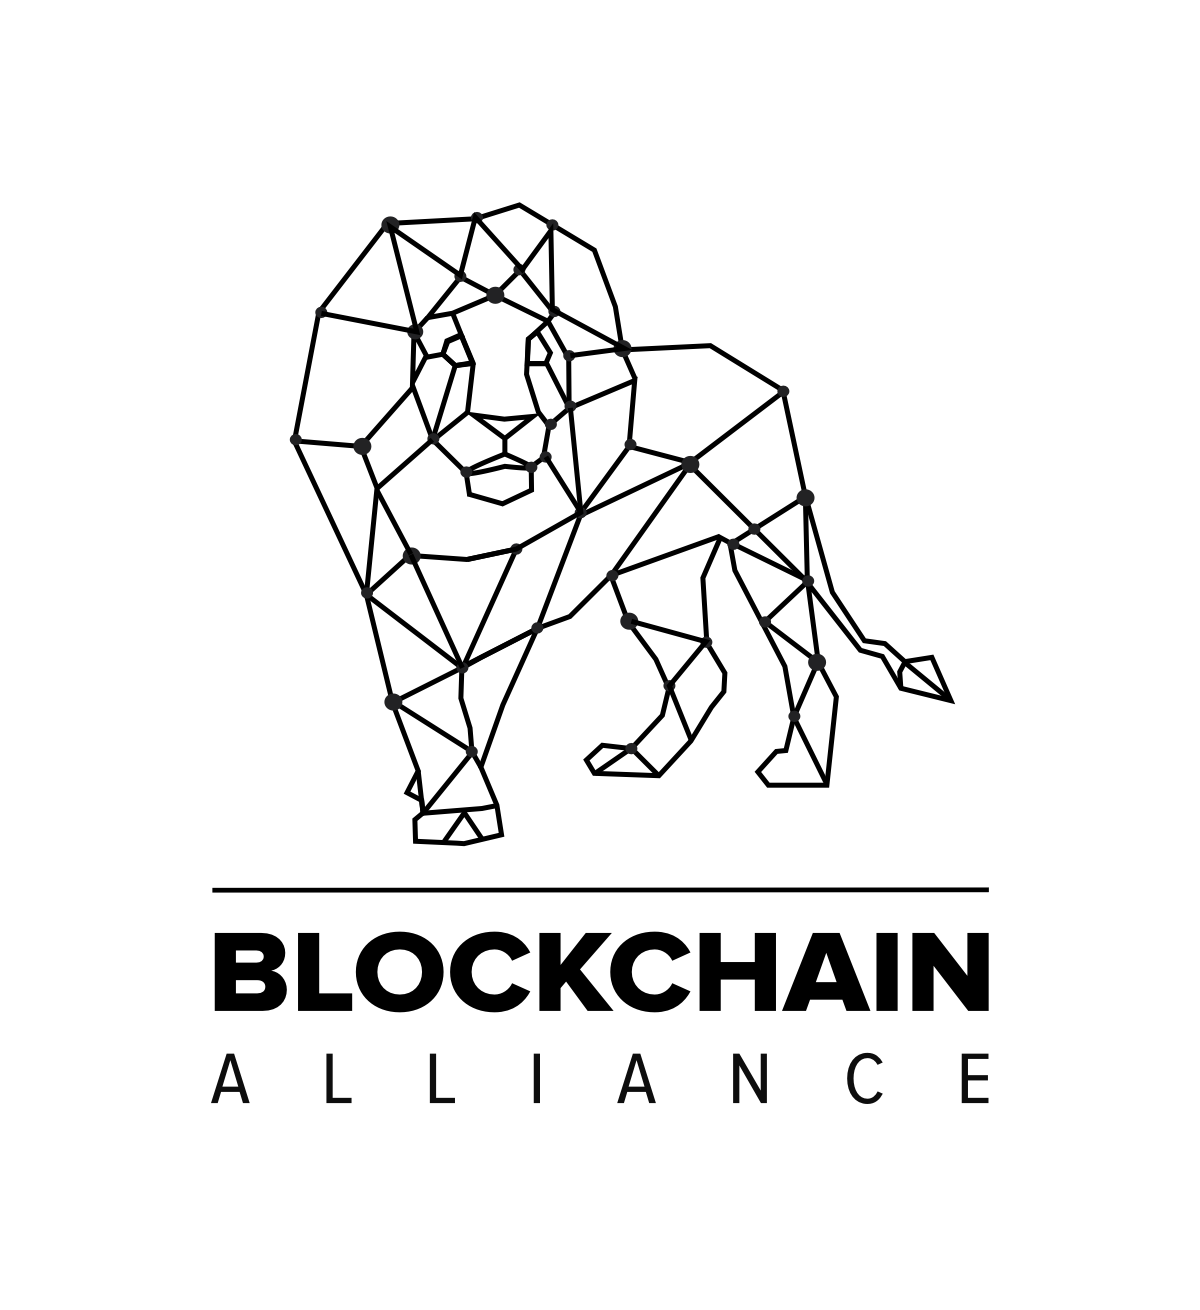 Blockchain Alliance & Acceleration Hub